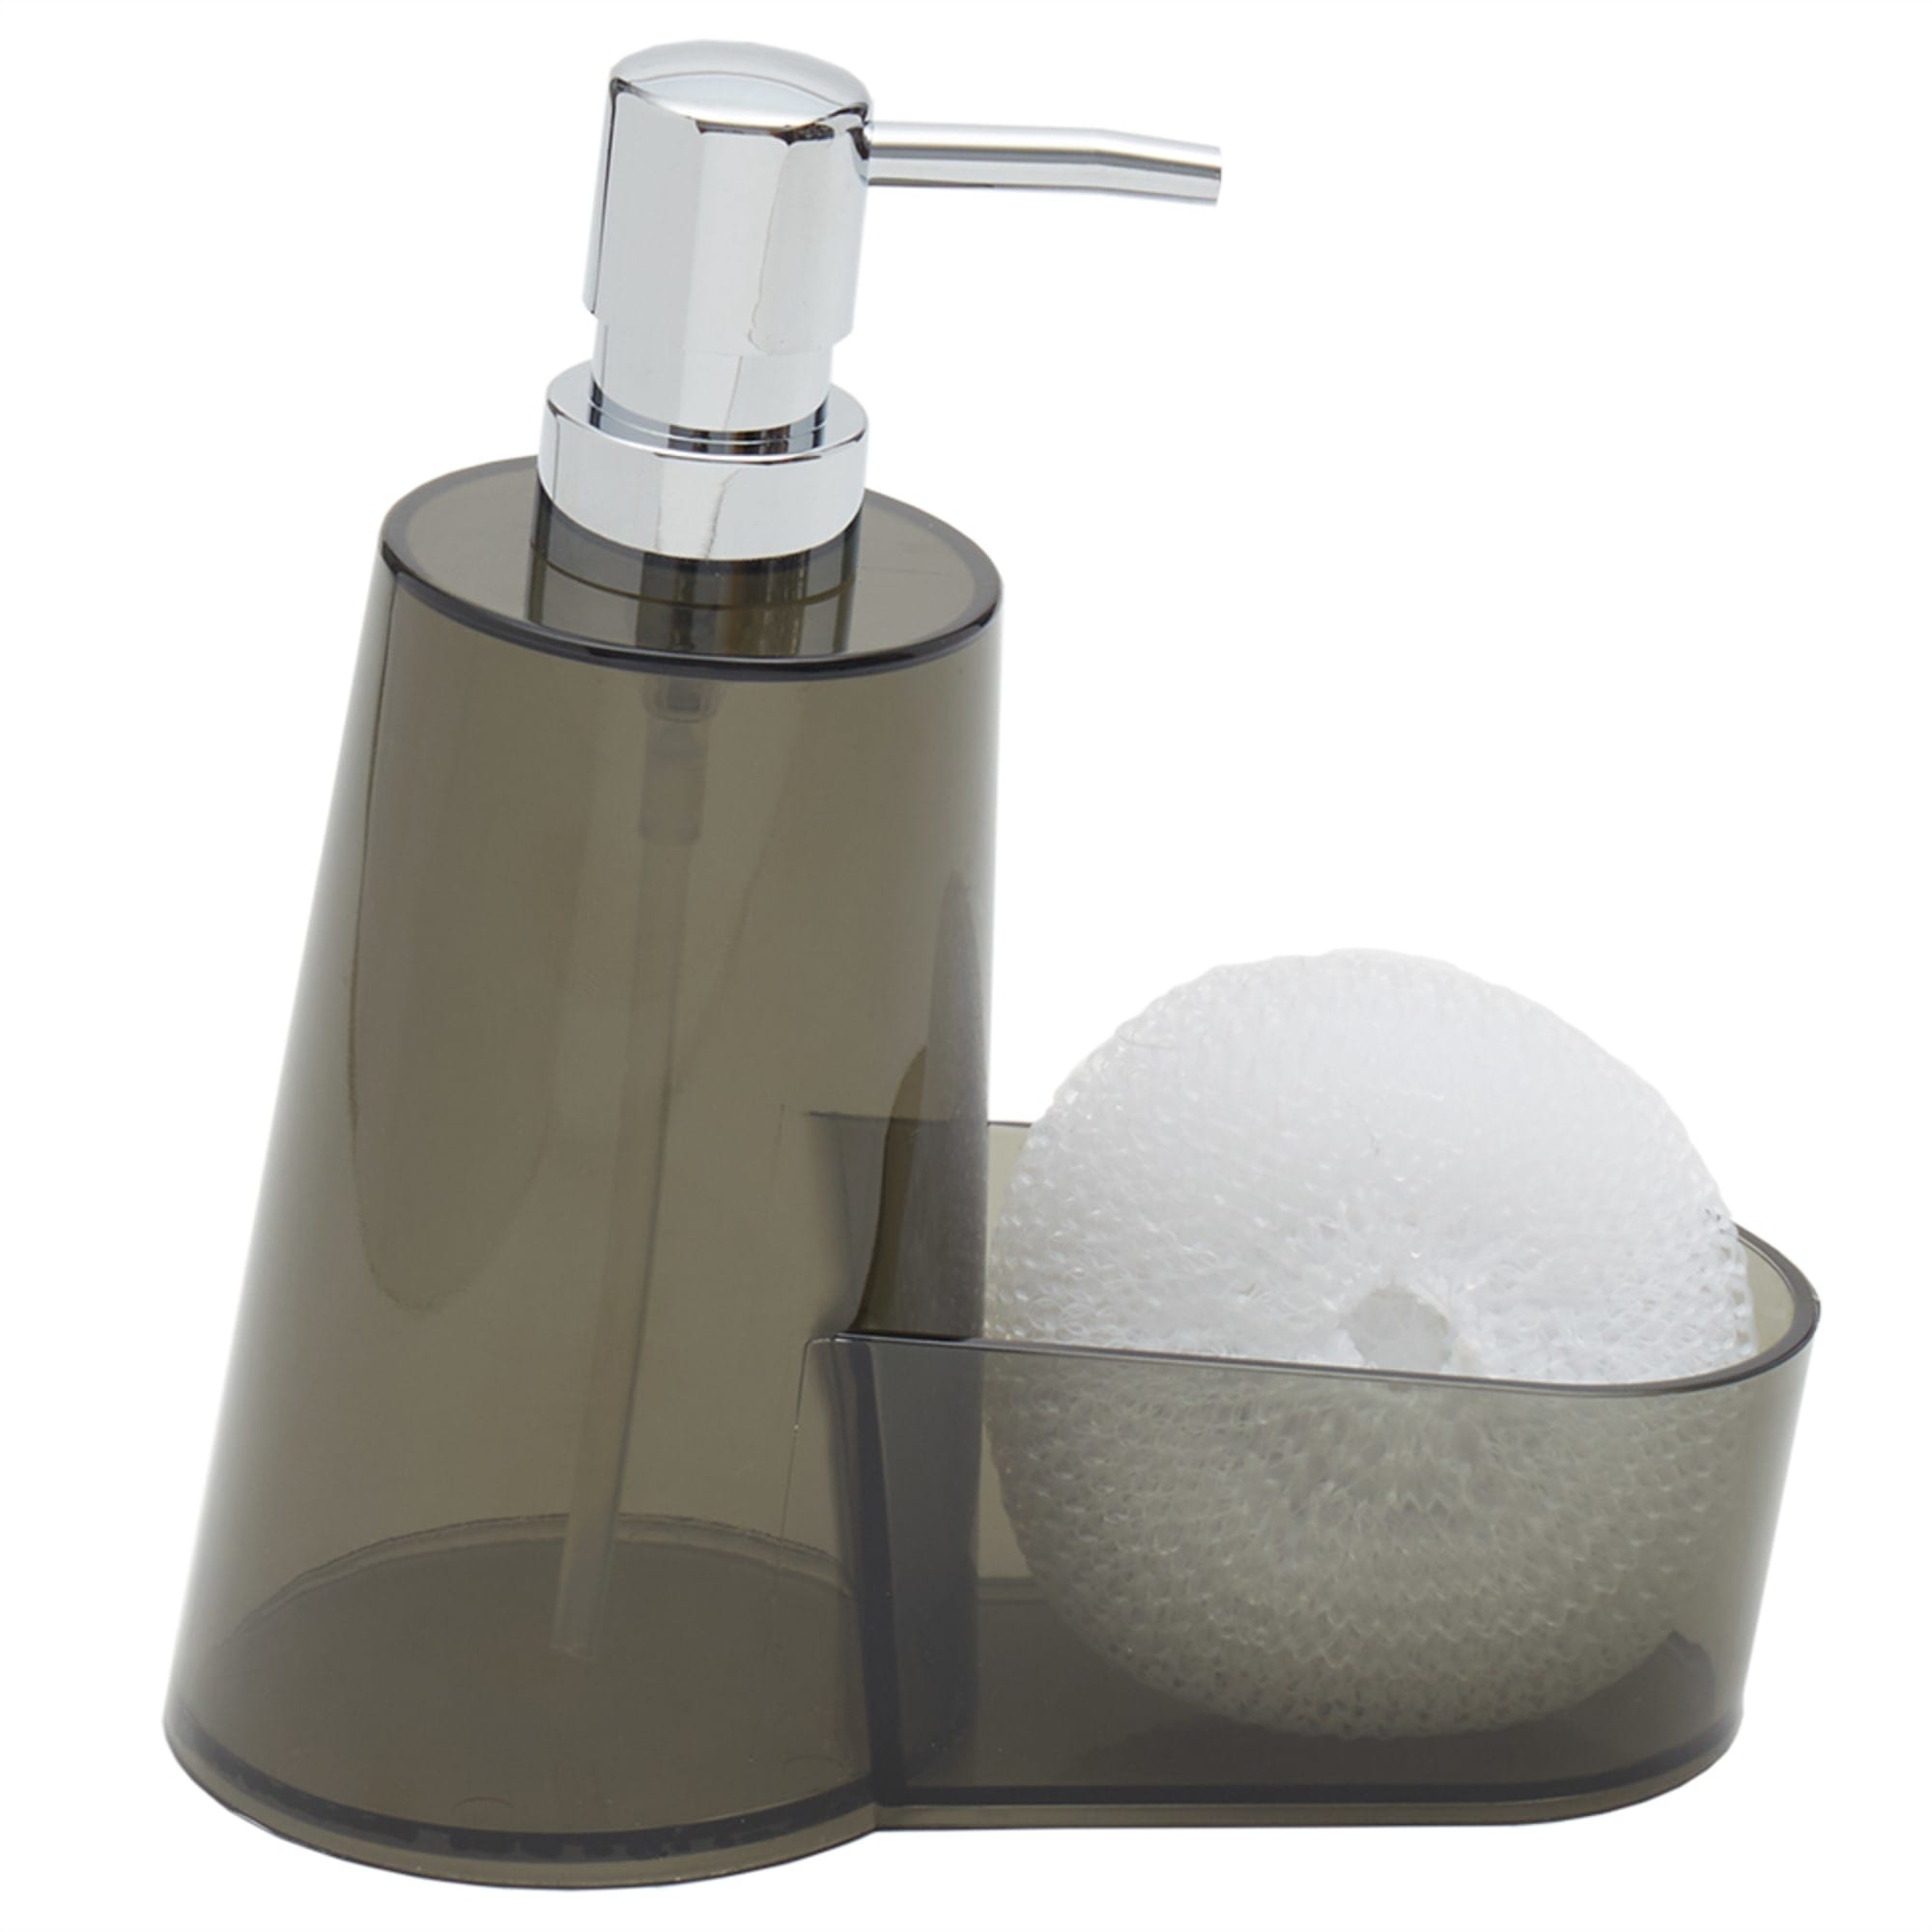 Home Basics 13.5 oz. Plastic Soap Dispenser with Sponge Compartment, Grey $4.00 EACH, CASE PACK OF 12